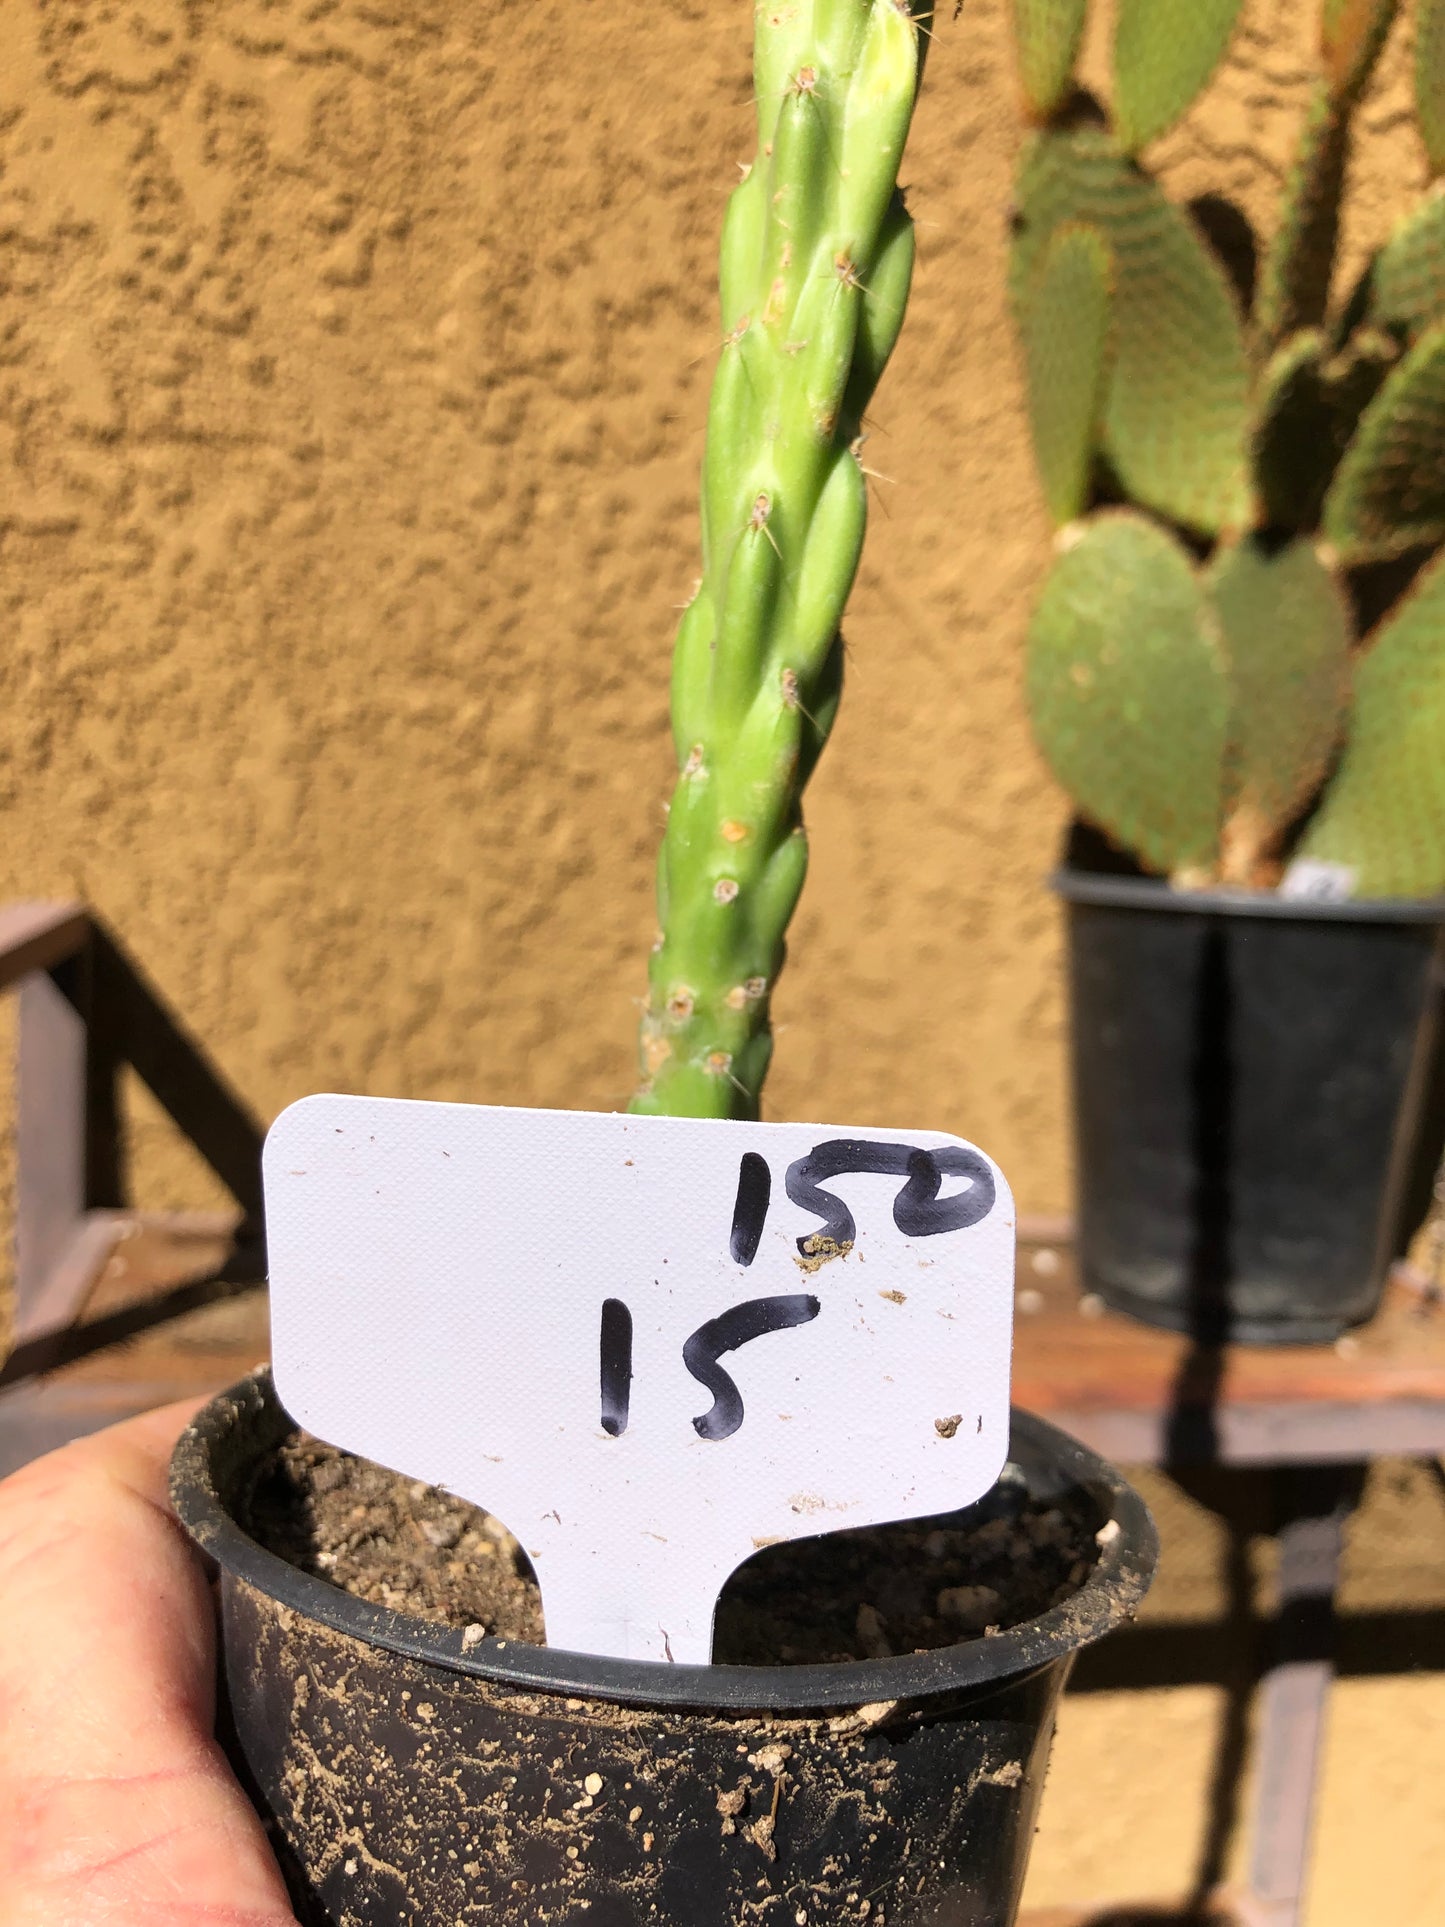 Cholla Cylindropuntia  Buckhorn Cactus 15”Tall #150W